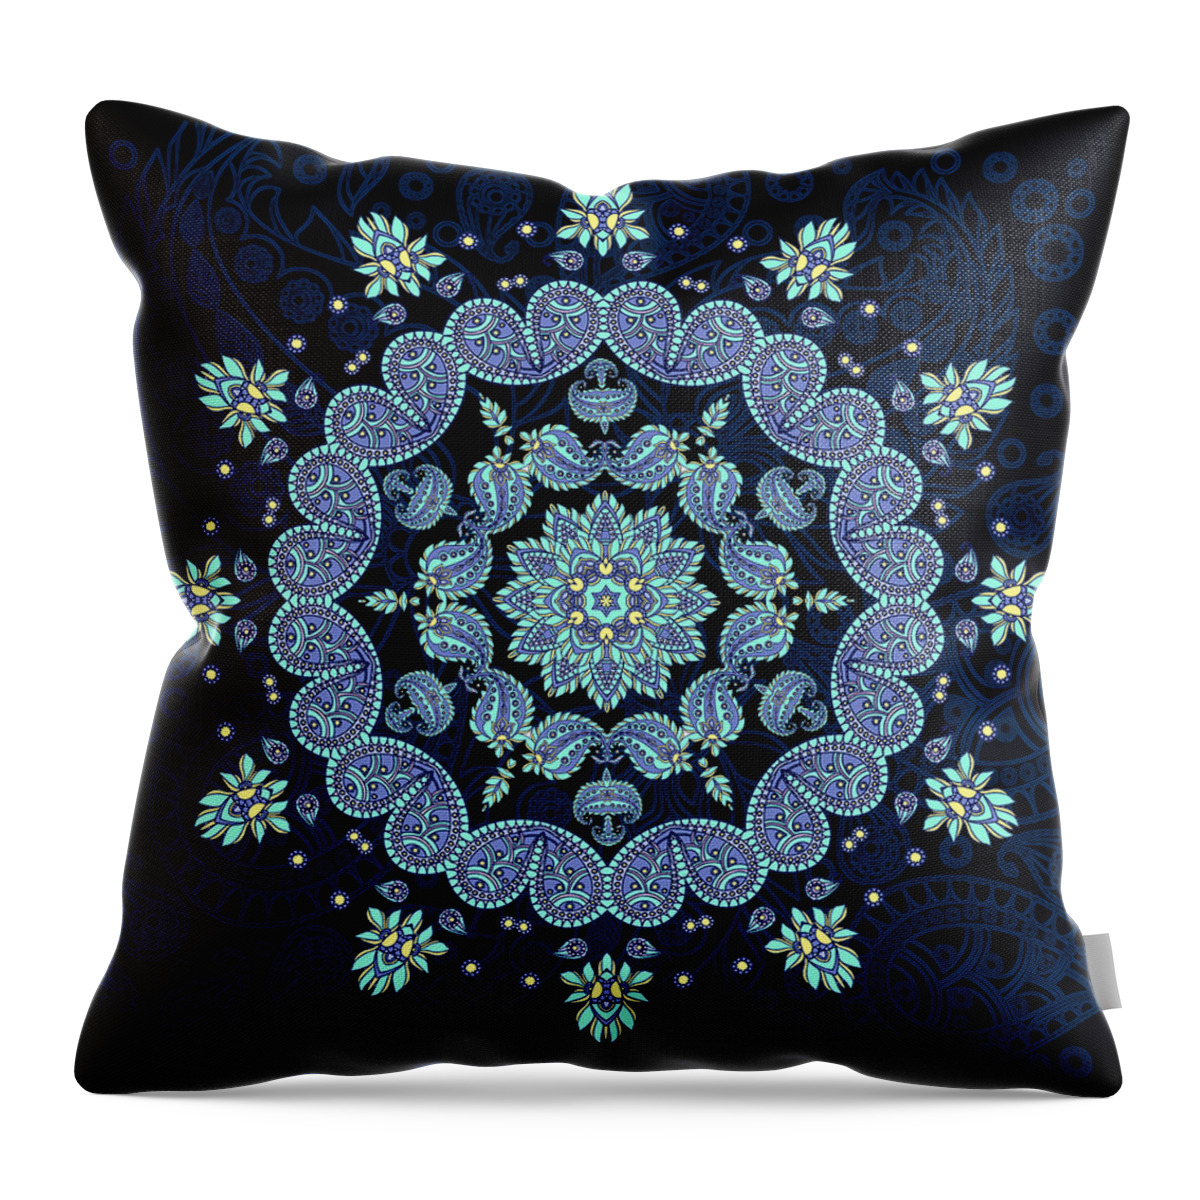 Pastel Throw Pillow featuring the digital art Pastel Paisley Mandala by Deborah Smith